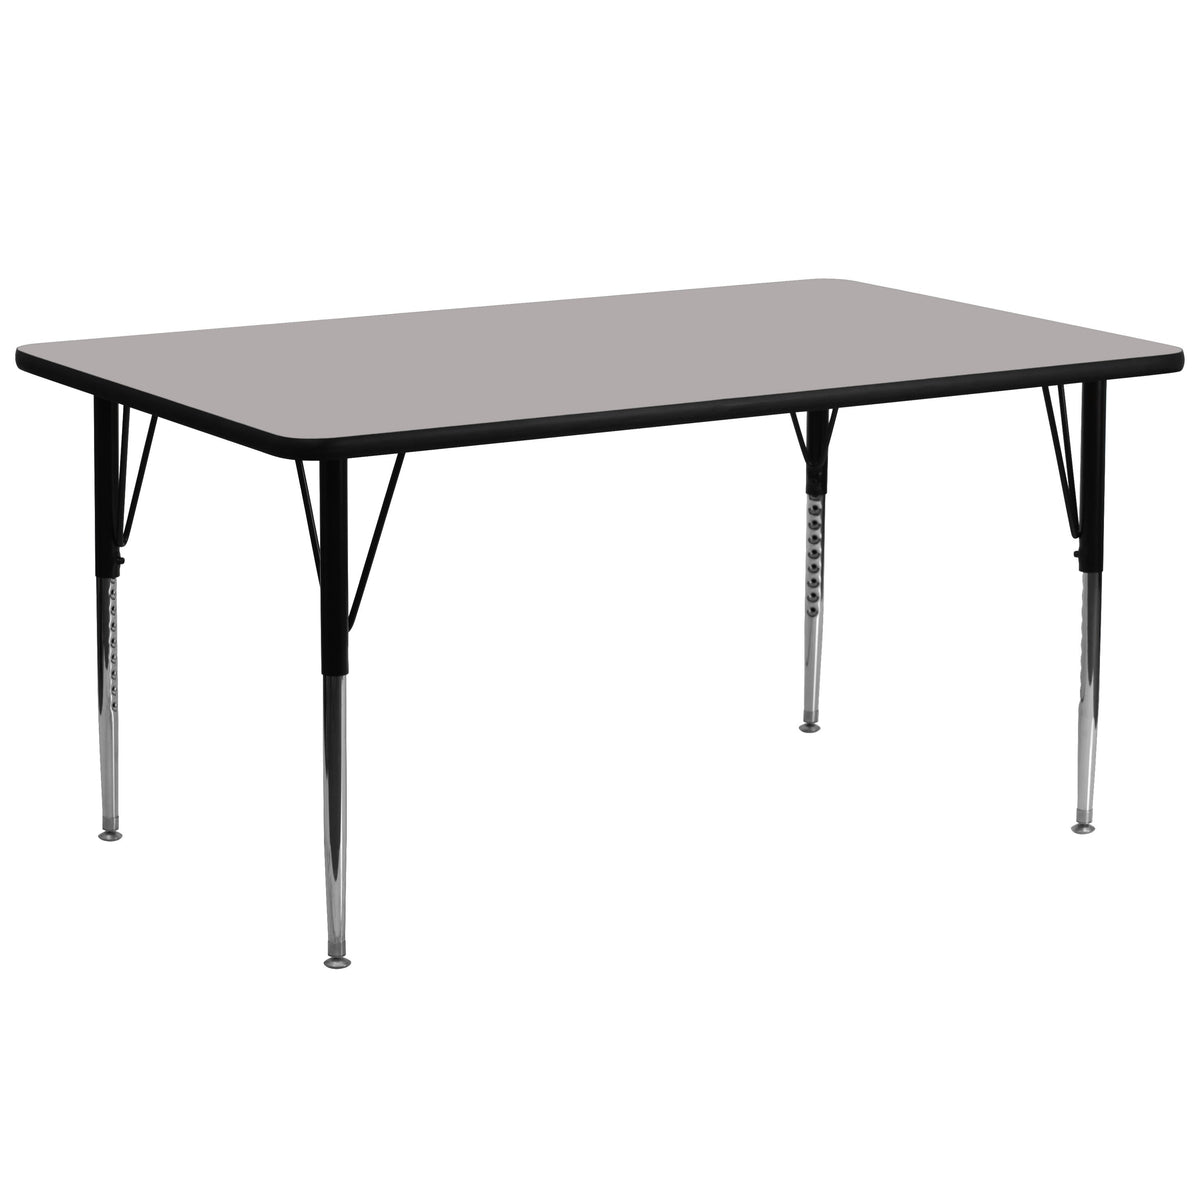 Gray |#| 30inchW x 72inchL Rectangular Grey HP Laminate Activity Table - Height Adjustable Legs